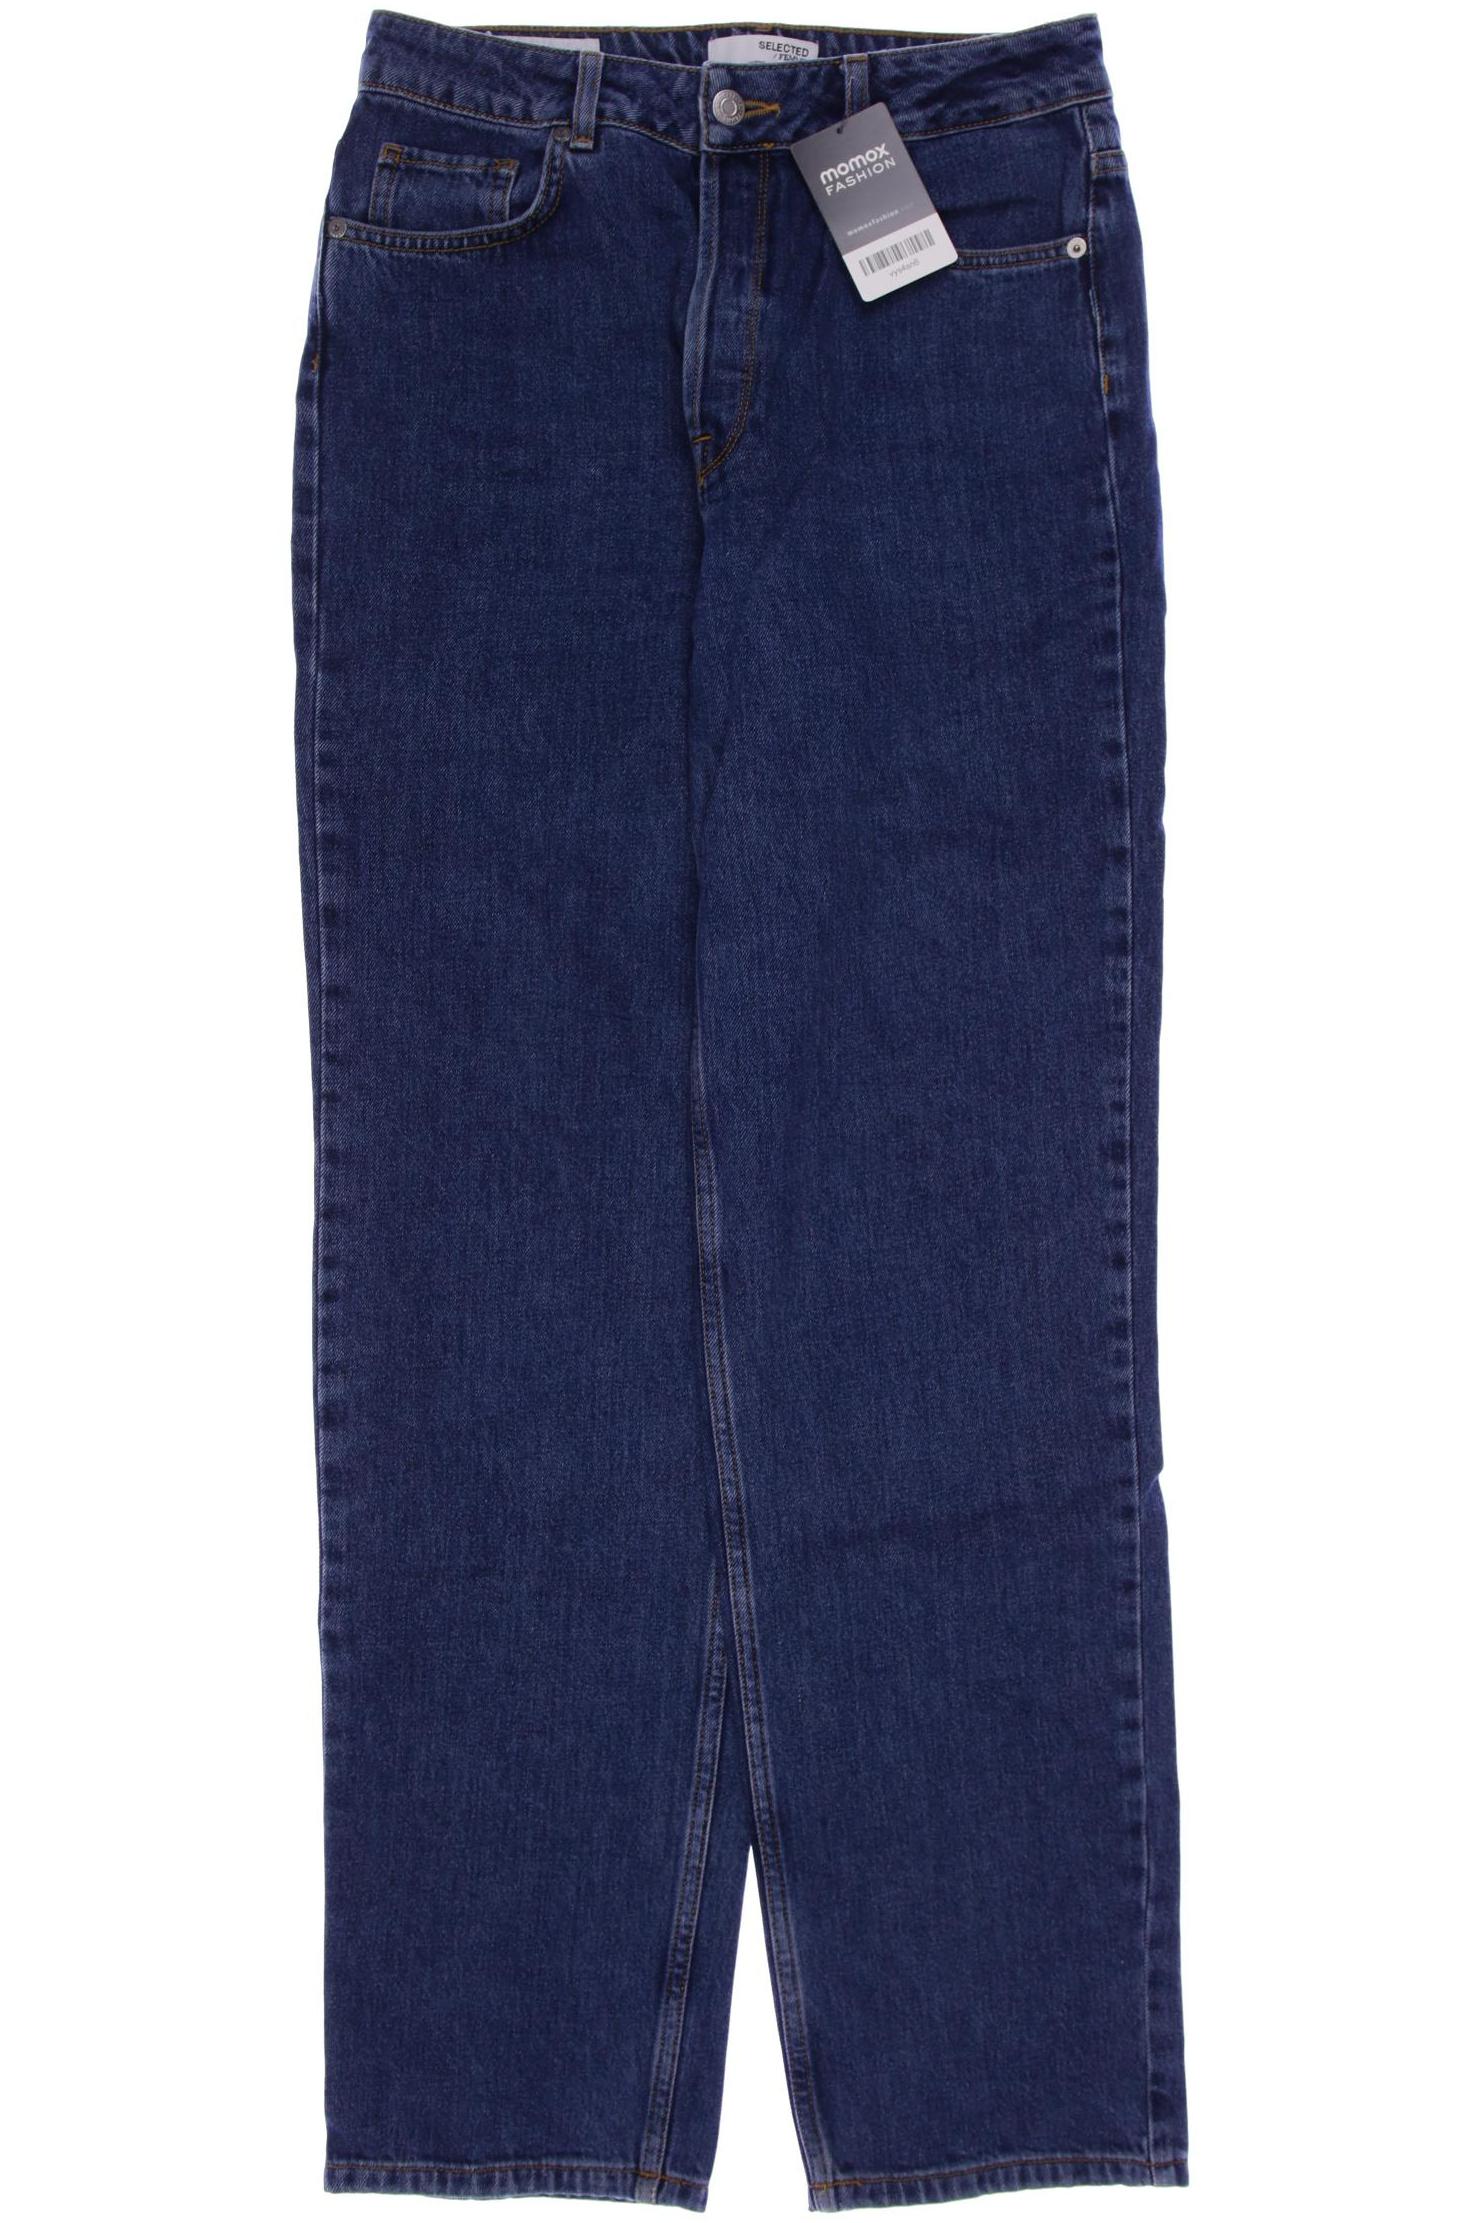 SELECTED Damen Jeans, blau von Selected